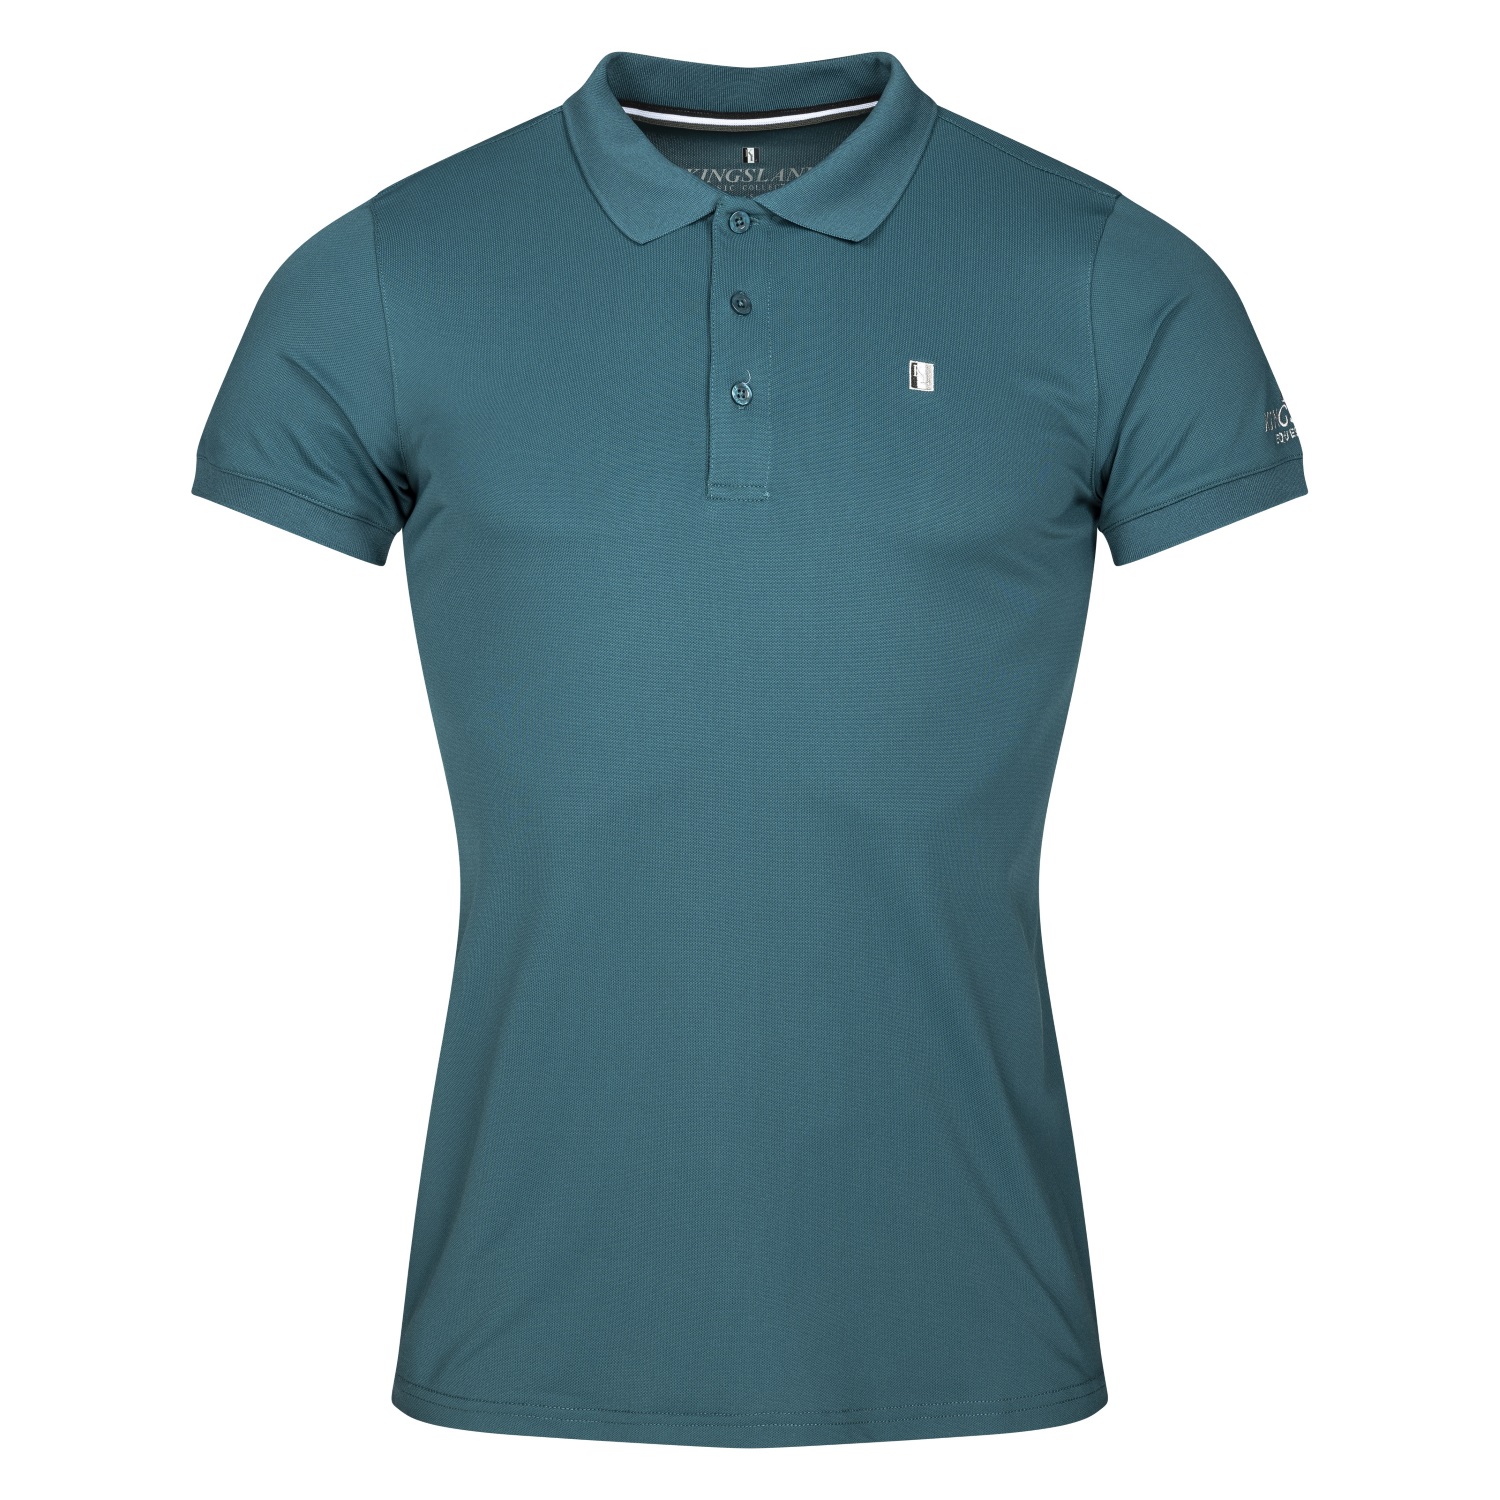 Kingsland Classic Herren Pique Polo Shirt Limited